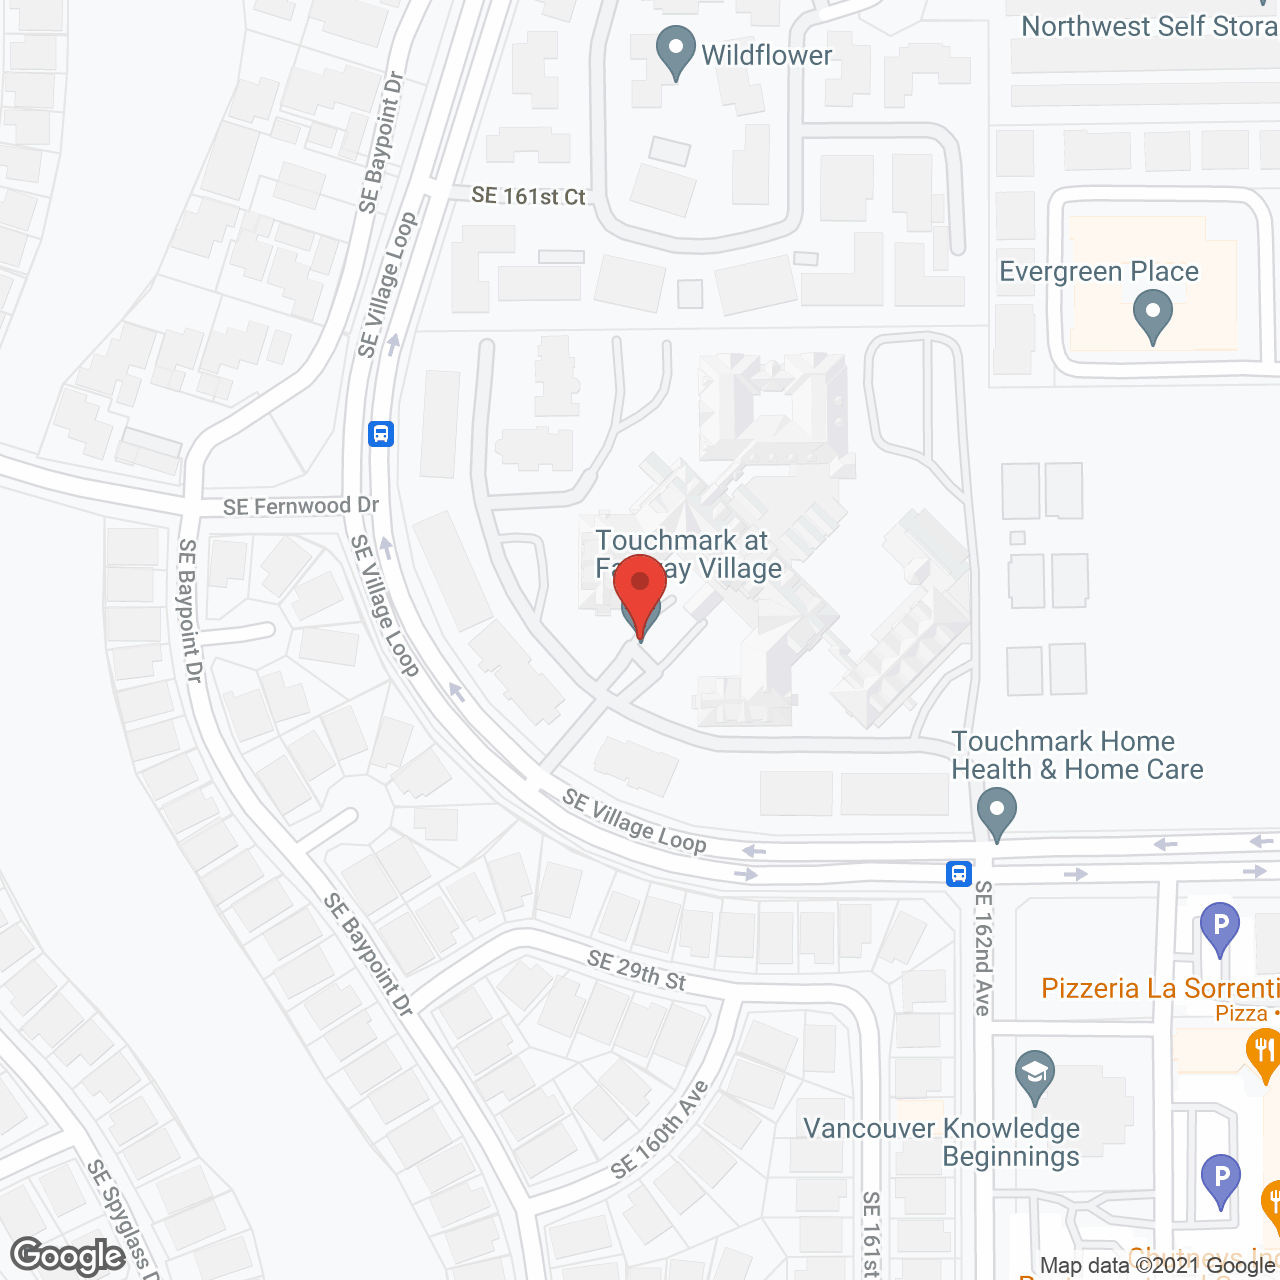 Touchmark at Fairway Village in google map